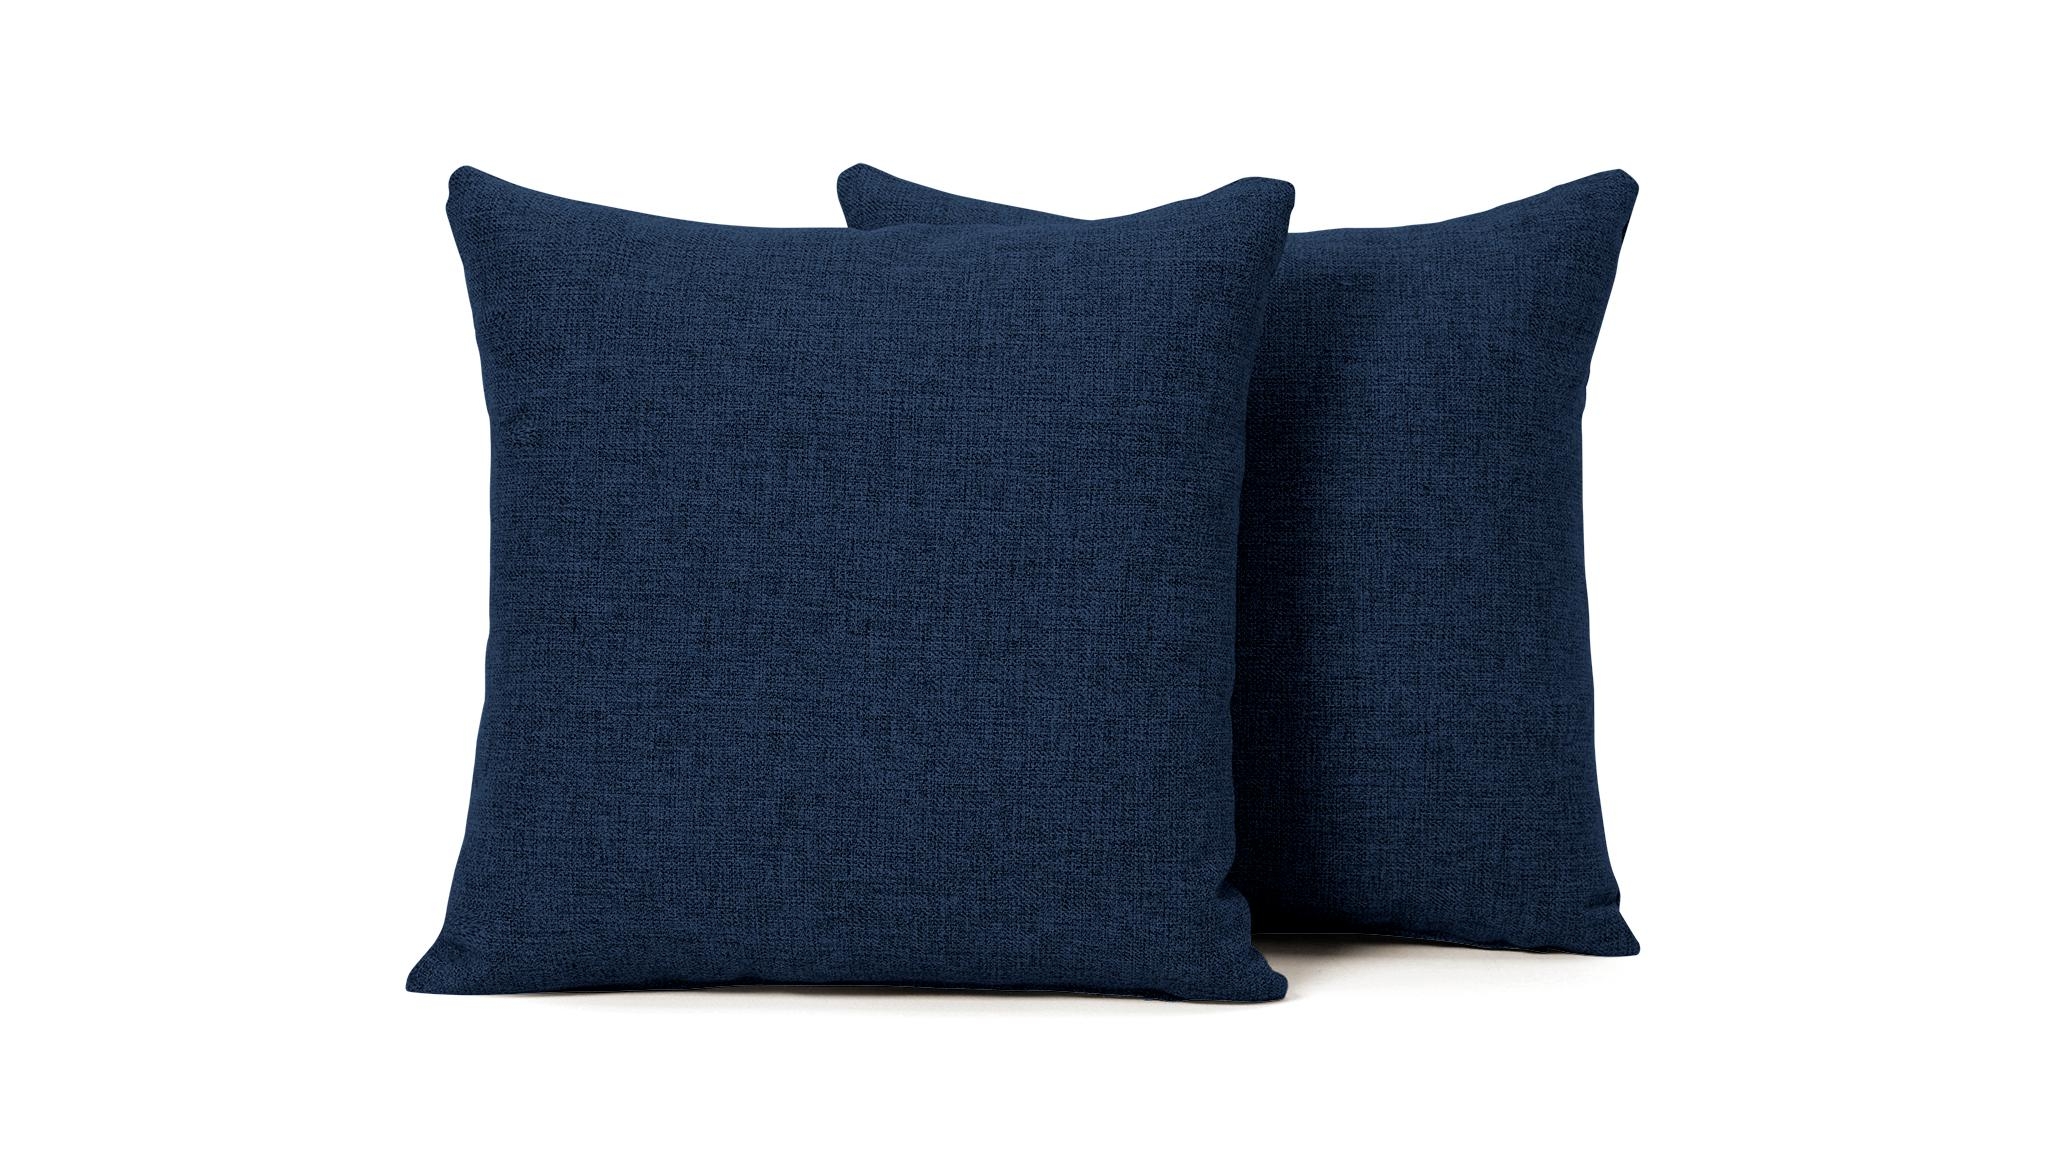 Blue Decorative Mid Century Modern Knife Edge Pillows 18 x 18 (Set of 2) - Key Largo Denim - Image 0